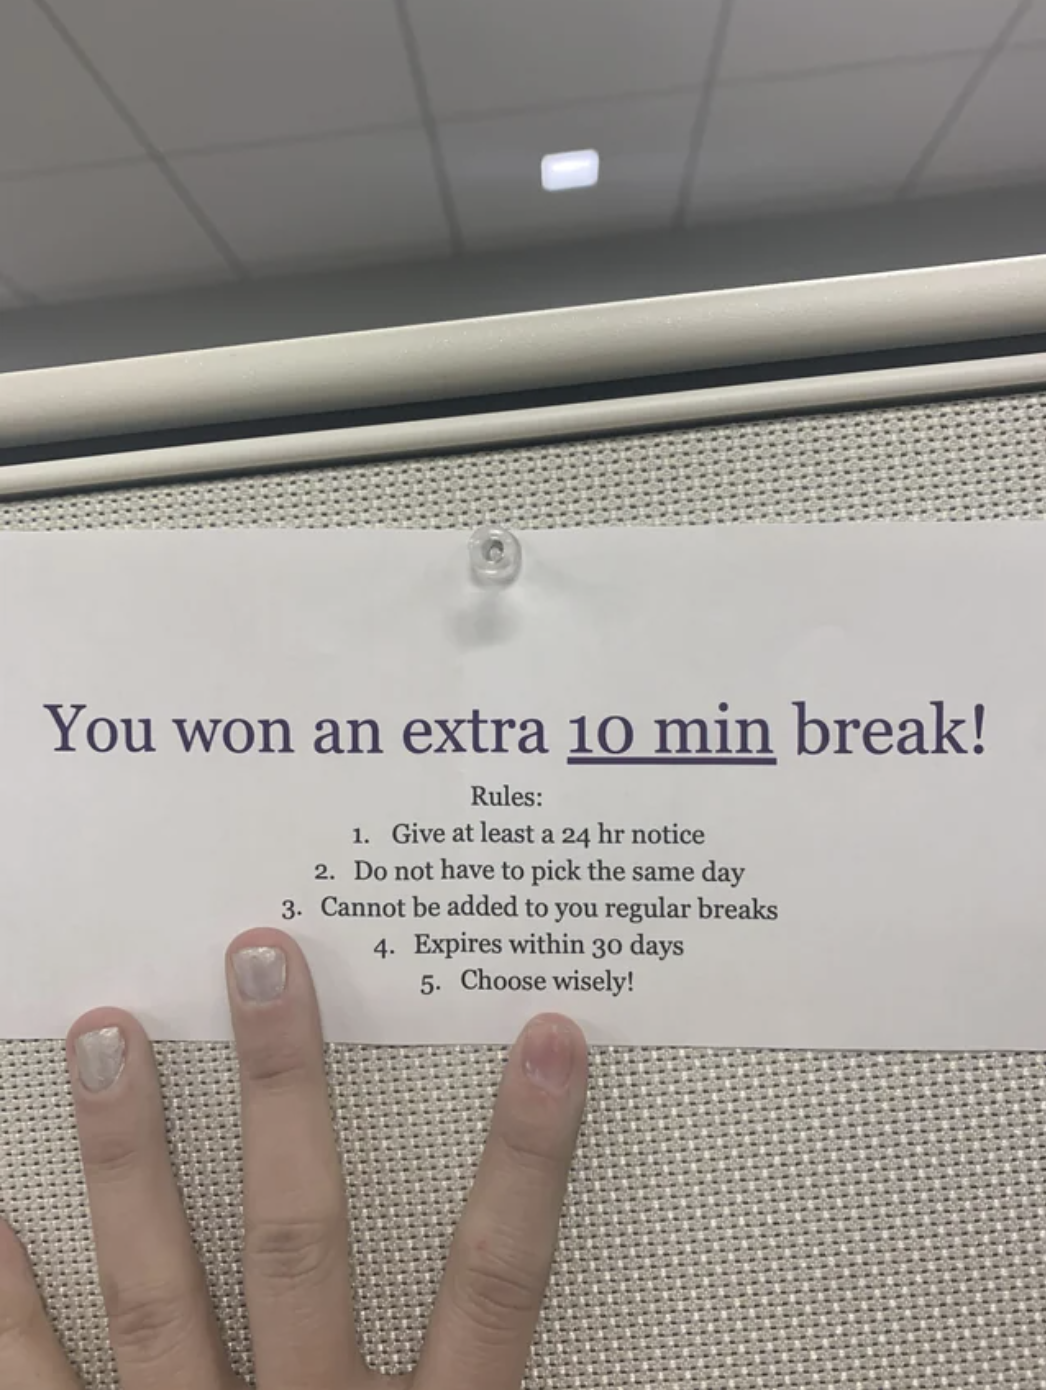 &quot;You won an extra 10 min break!&quot;